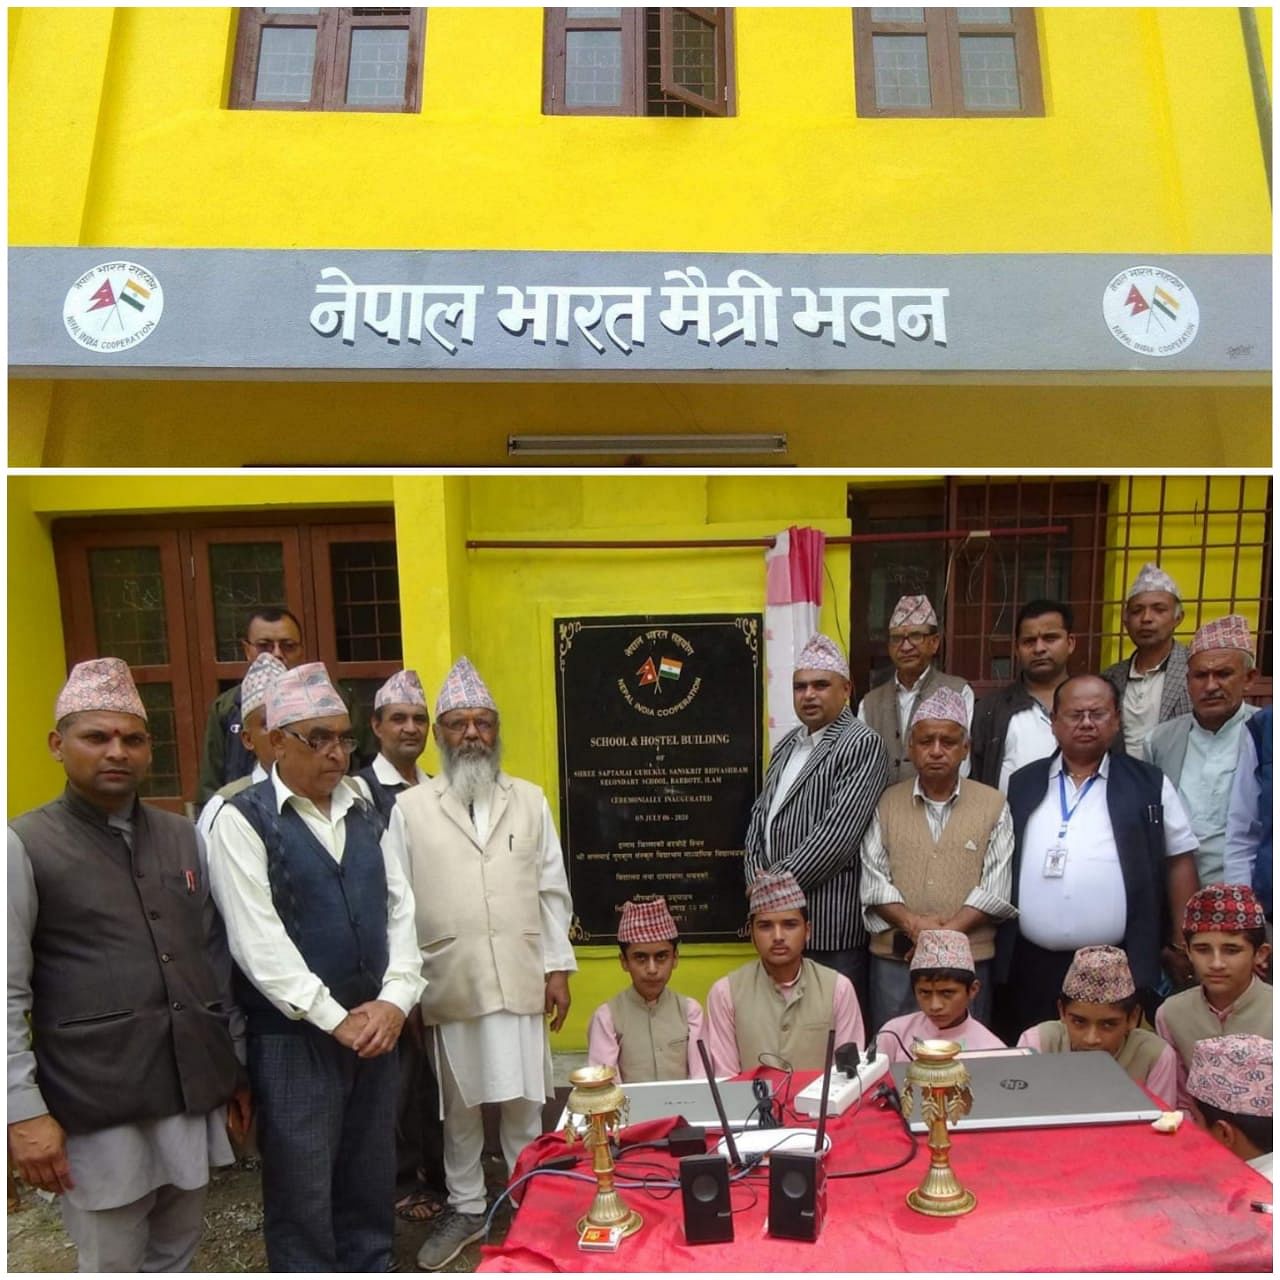 Inauguration of new school and hostel blocks of Shree Saptmai Gurukul Sanskrit Vidhyalaya at Barbote in Ilam done today. Credit:Twitter/@IndiaInNepal